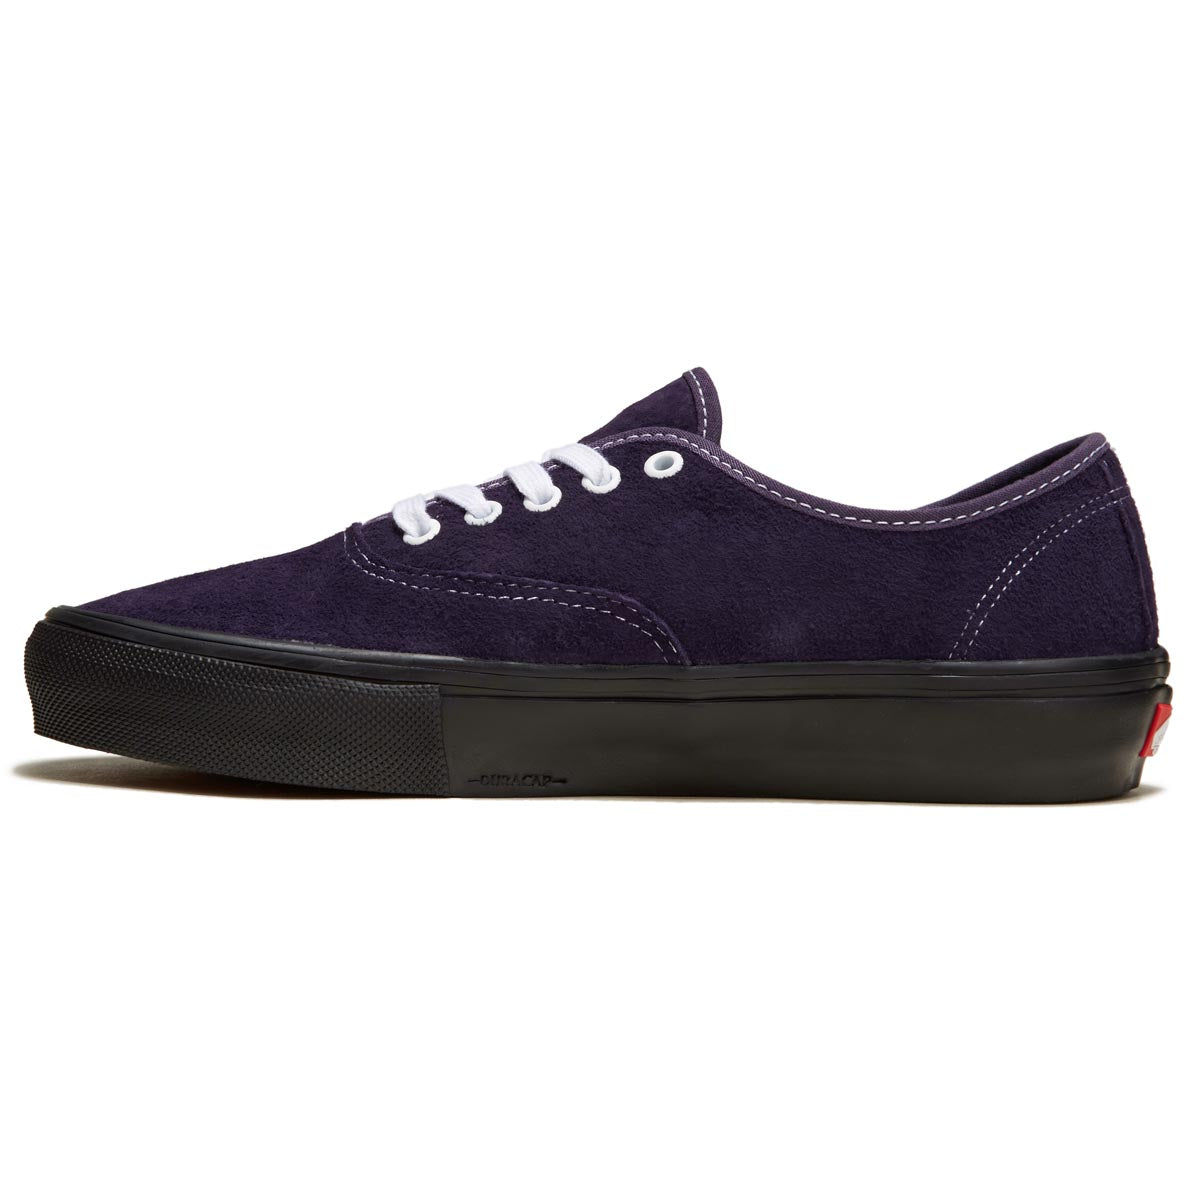 Vans Skate Authentic Shoes - Pig Suede Dark Purple/Black image 2